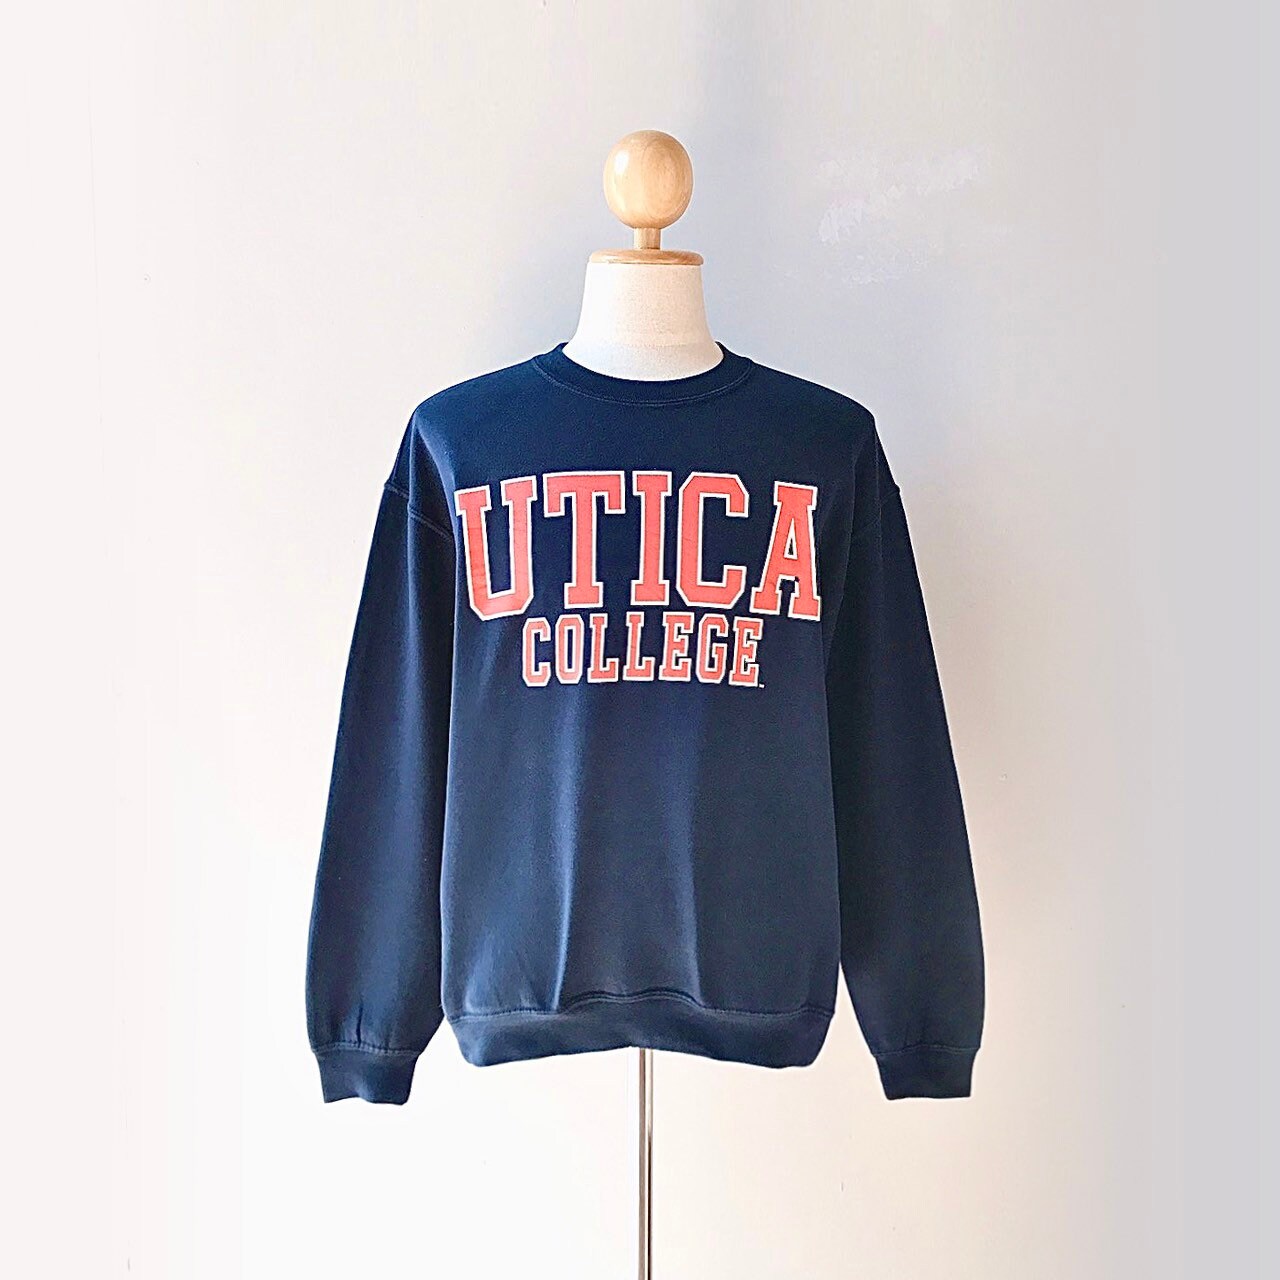 Vintage UTICA College Sweatshirt size M | Etsy